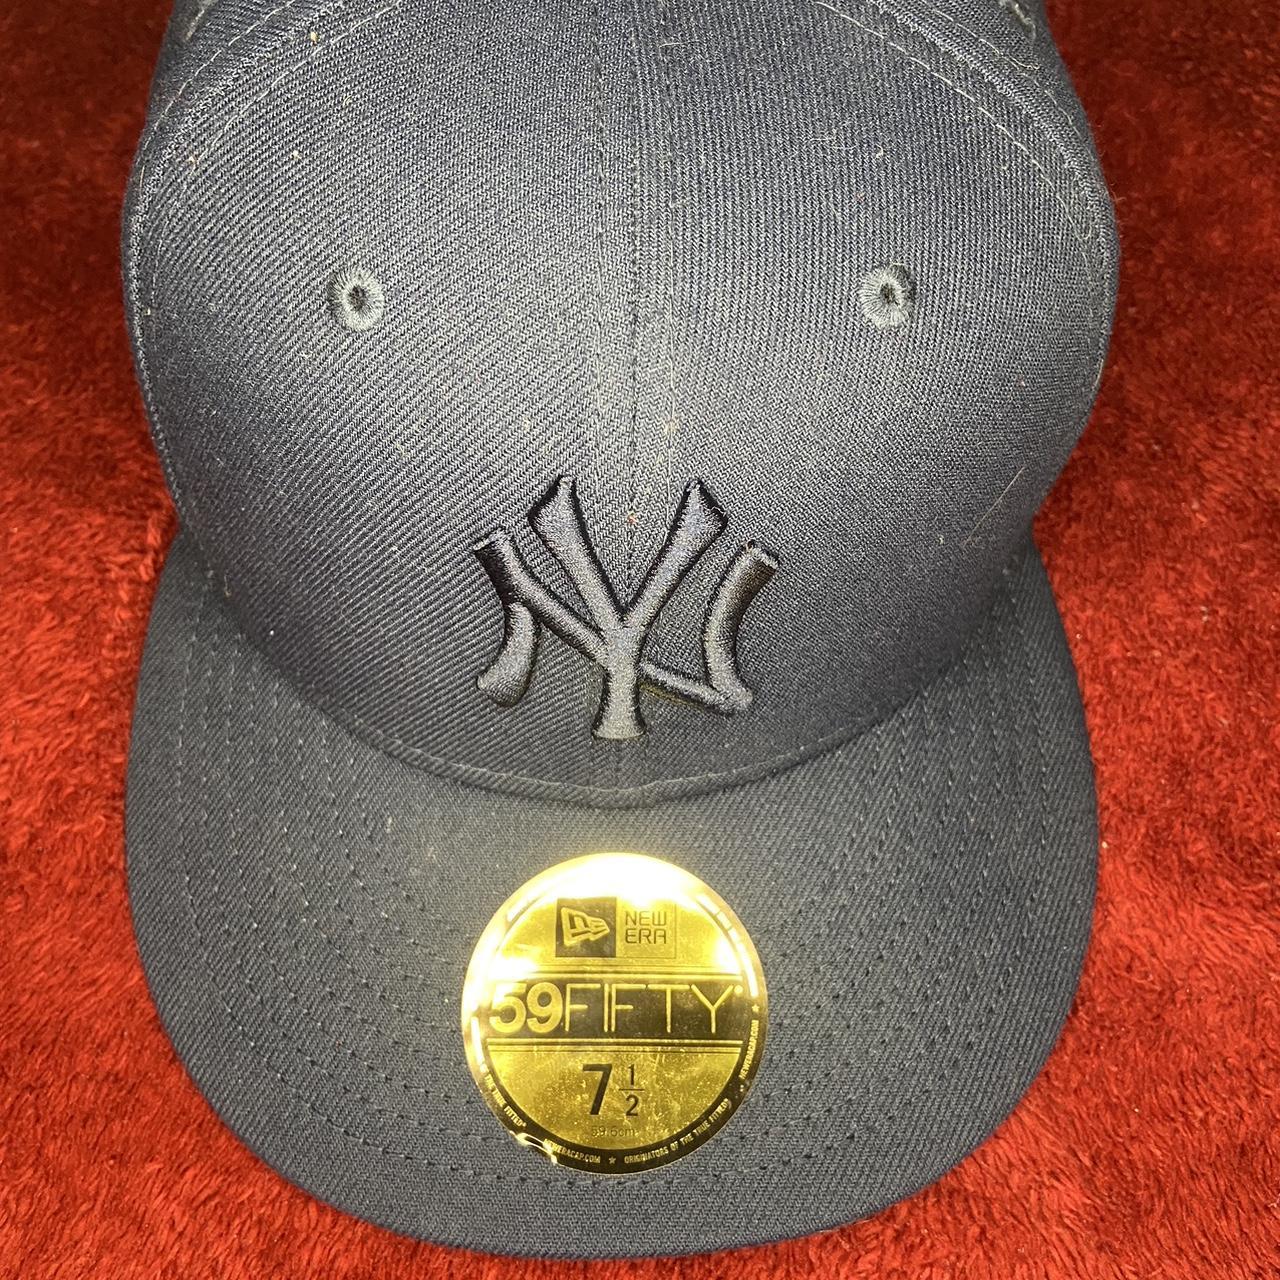 Yankees Big League Chew Cap Size 7 1/2 - Depop